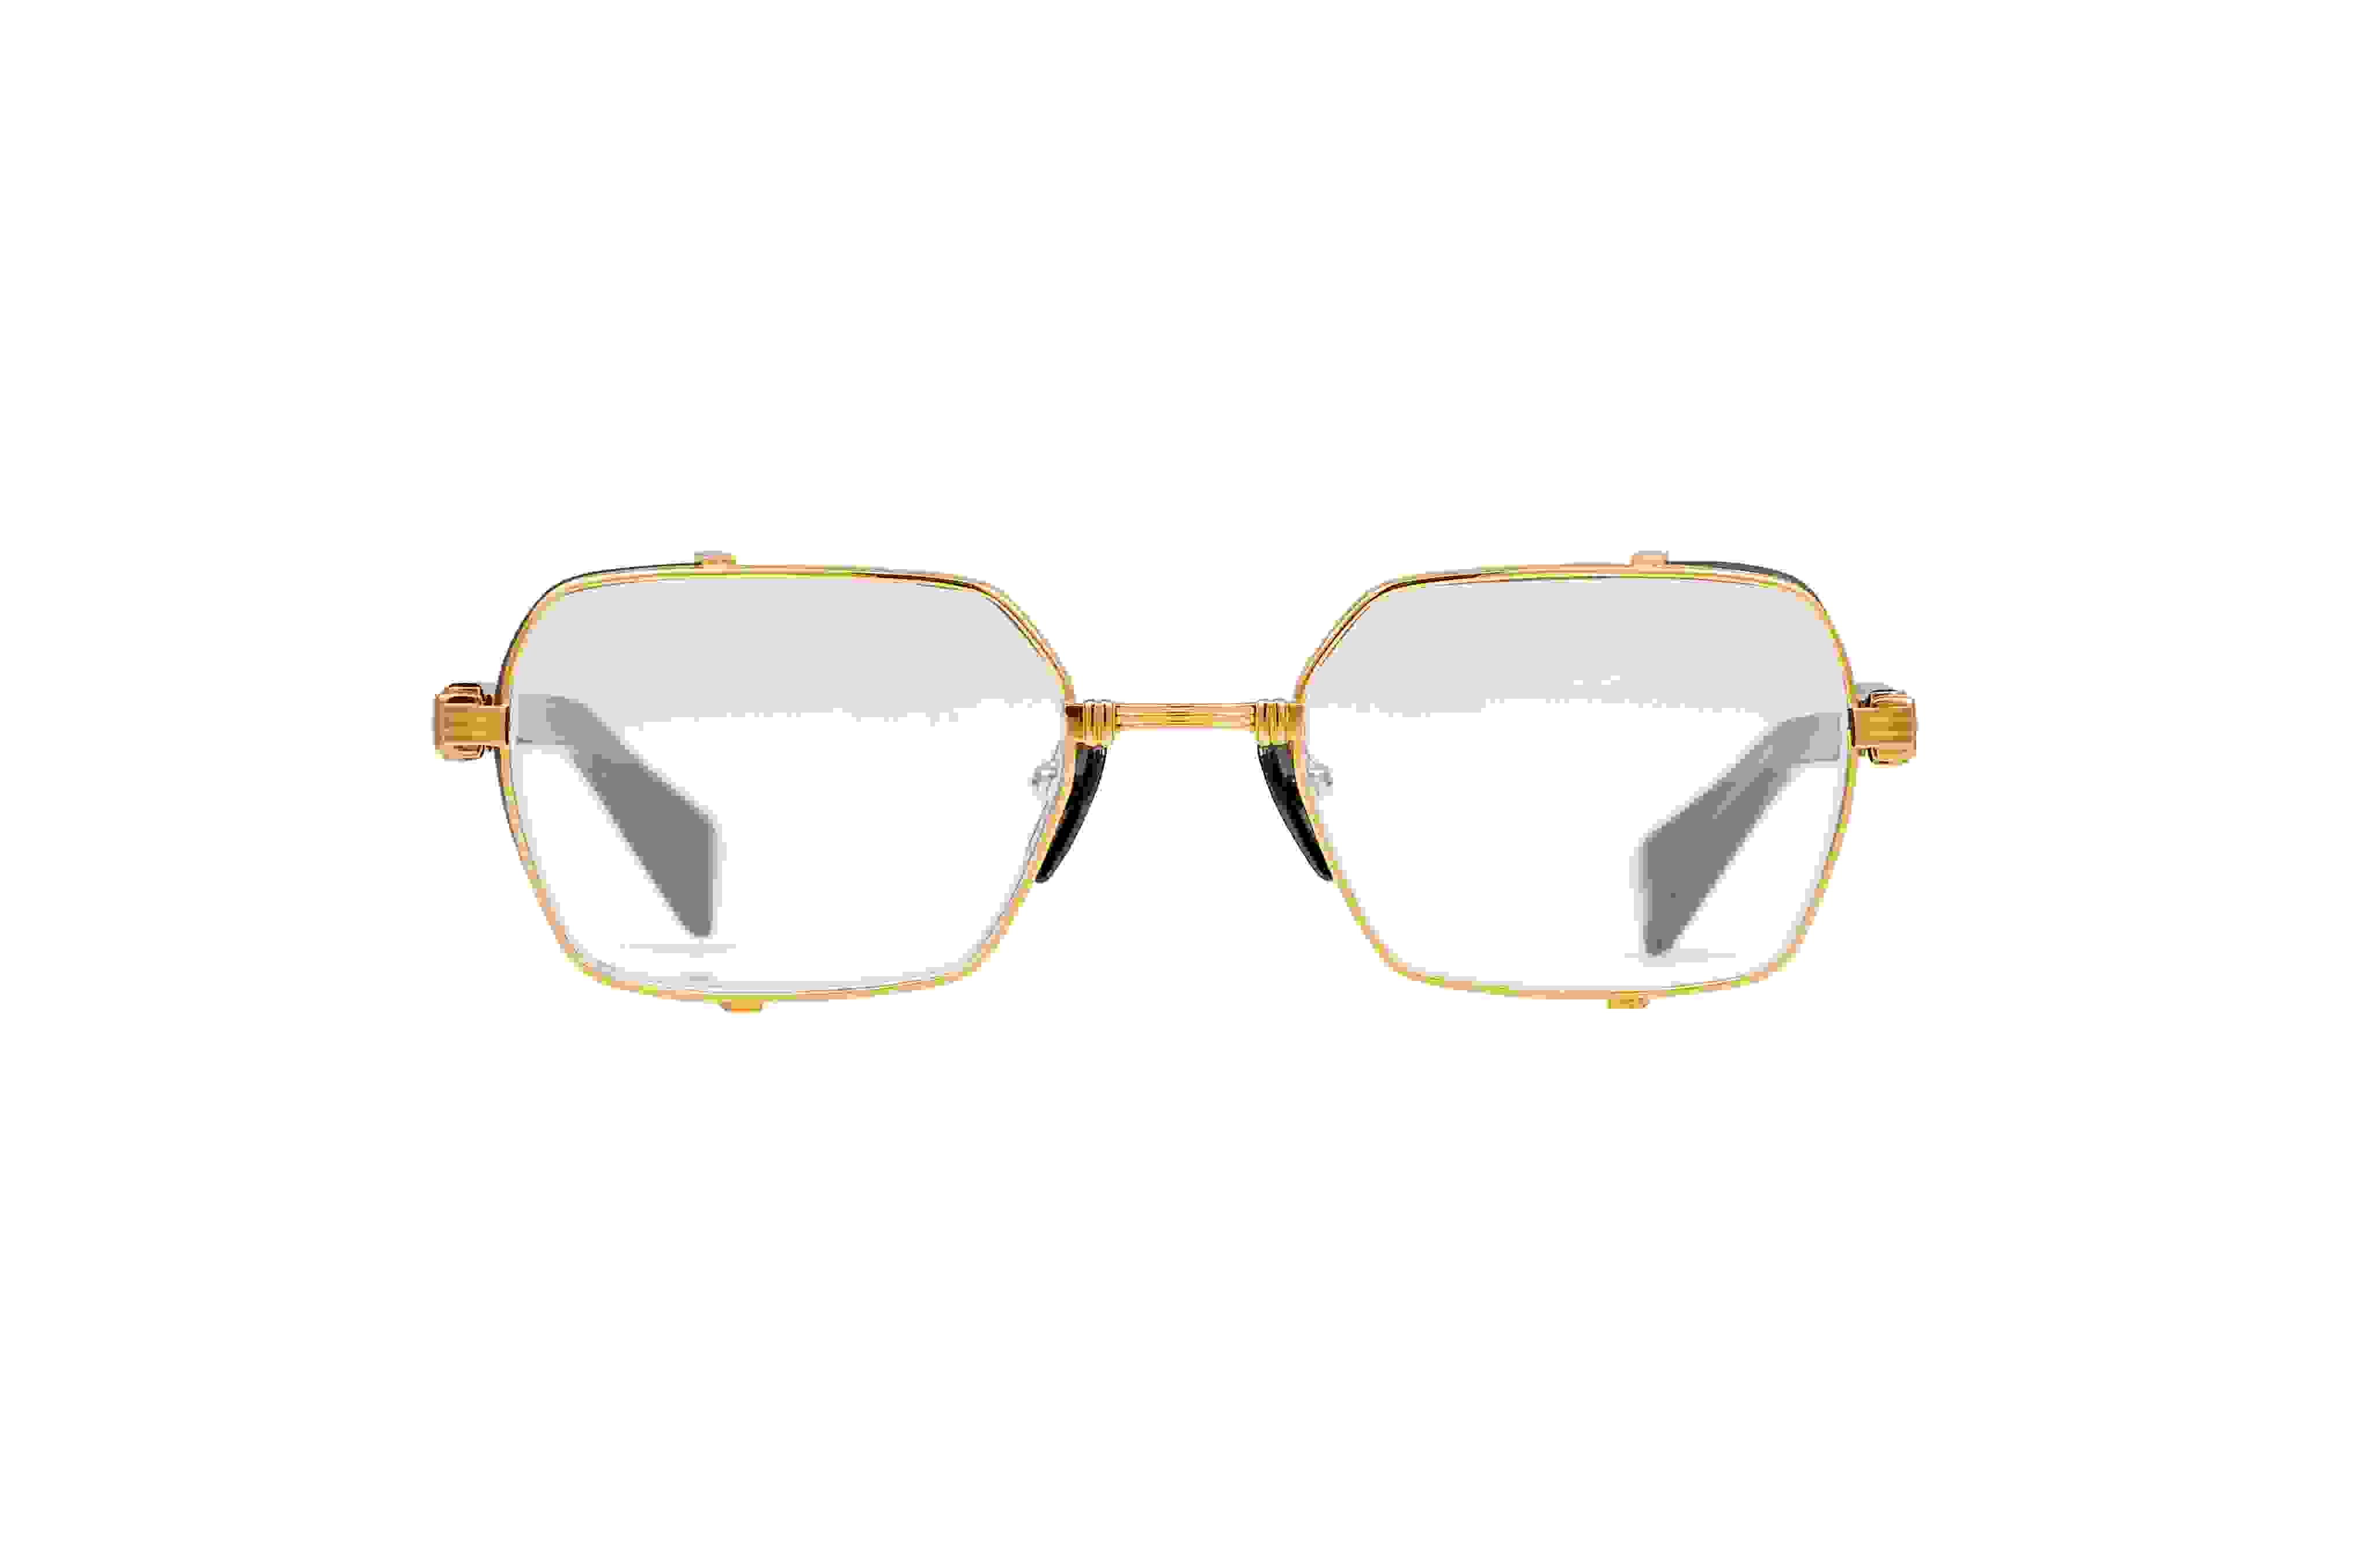 Balmain Eyewear Brigade III Optical Black/Gold